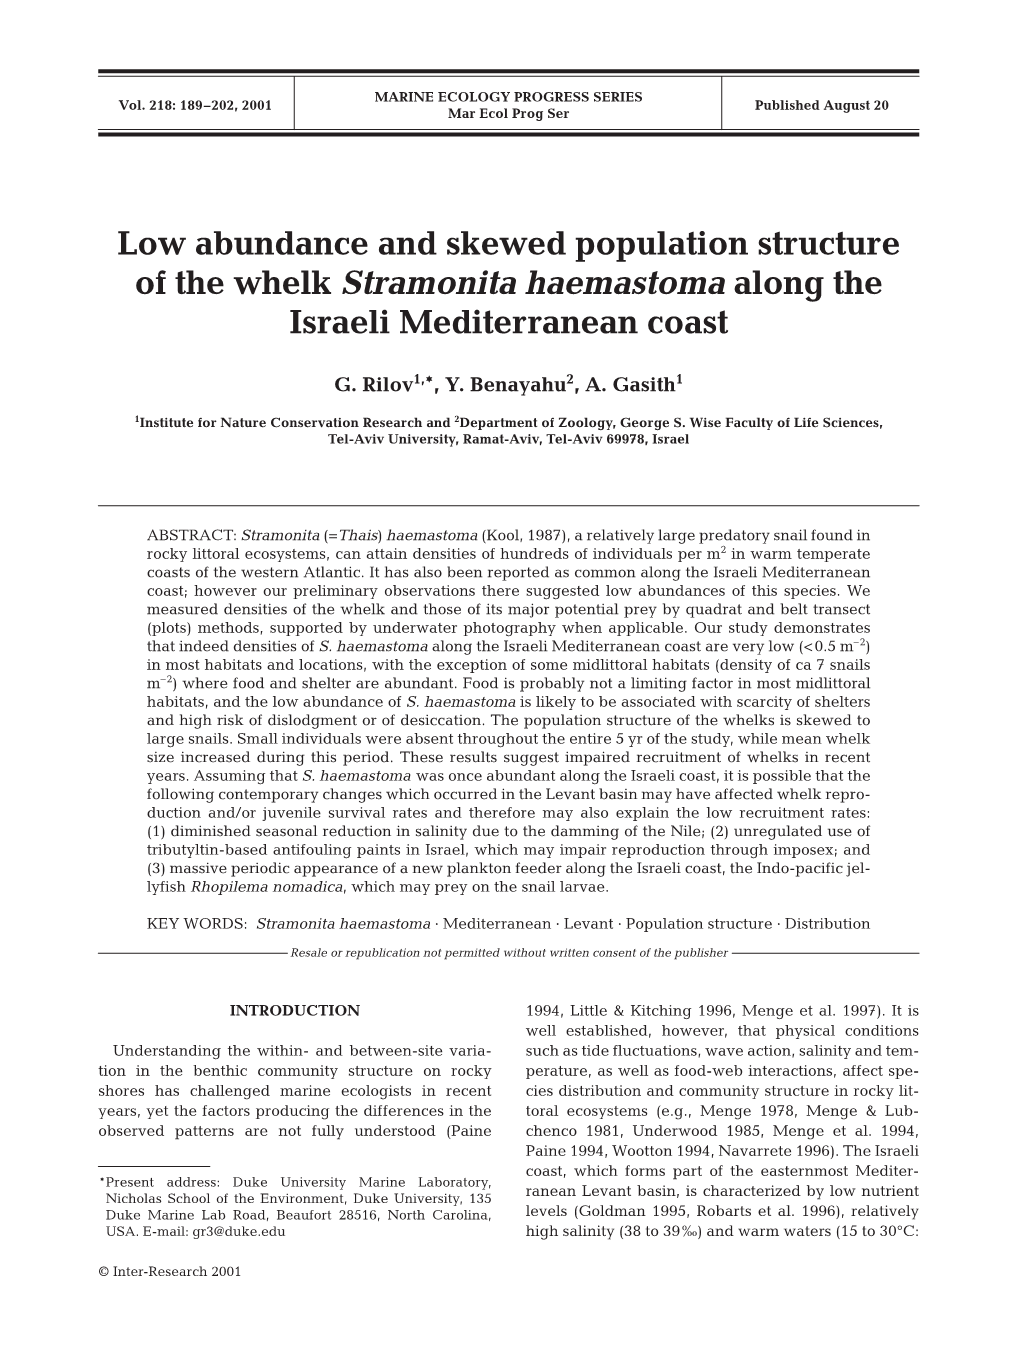 Low Abundance and Skewed Population Structure of the Whelk Stramonita Haemastoma Along the Israeli Mediterranean Coast